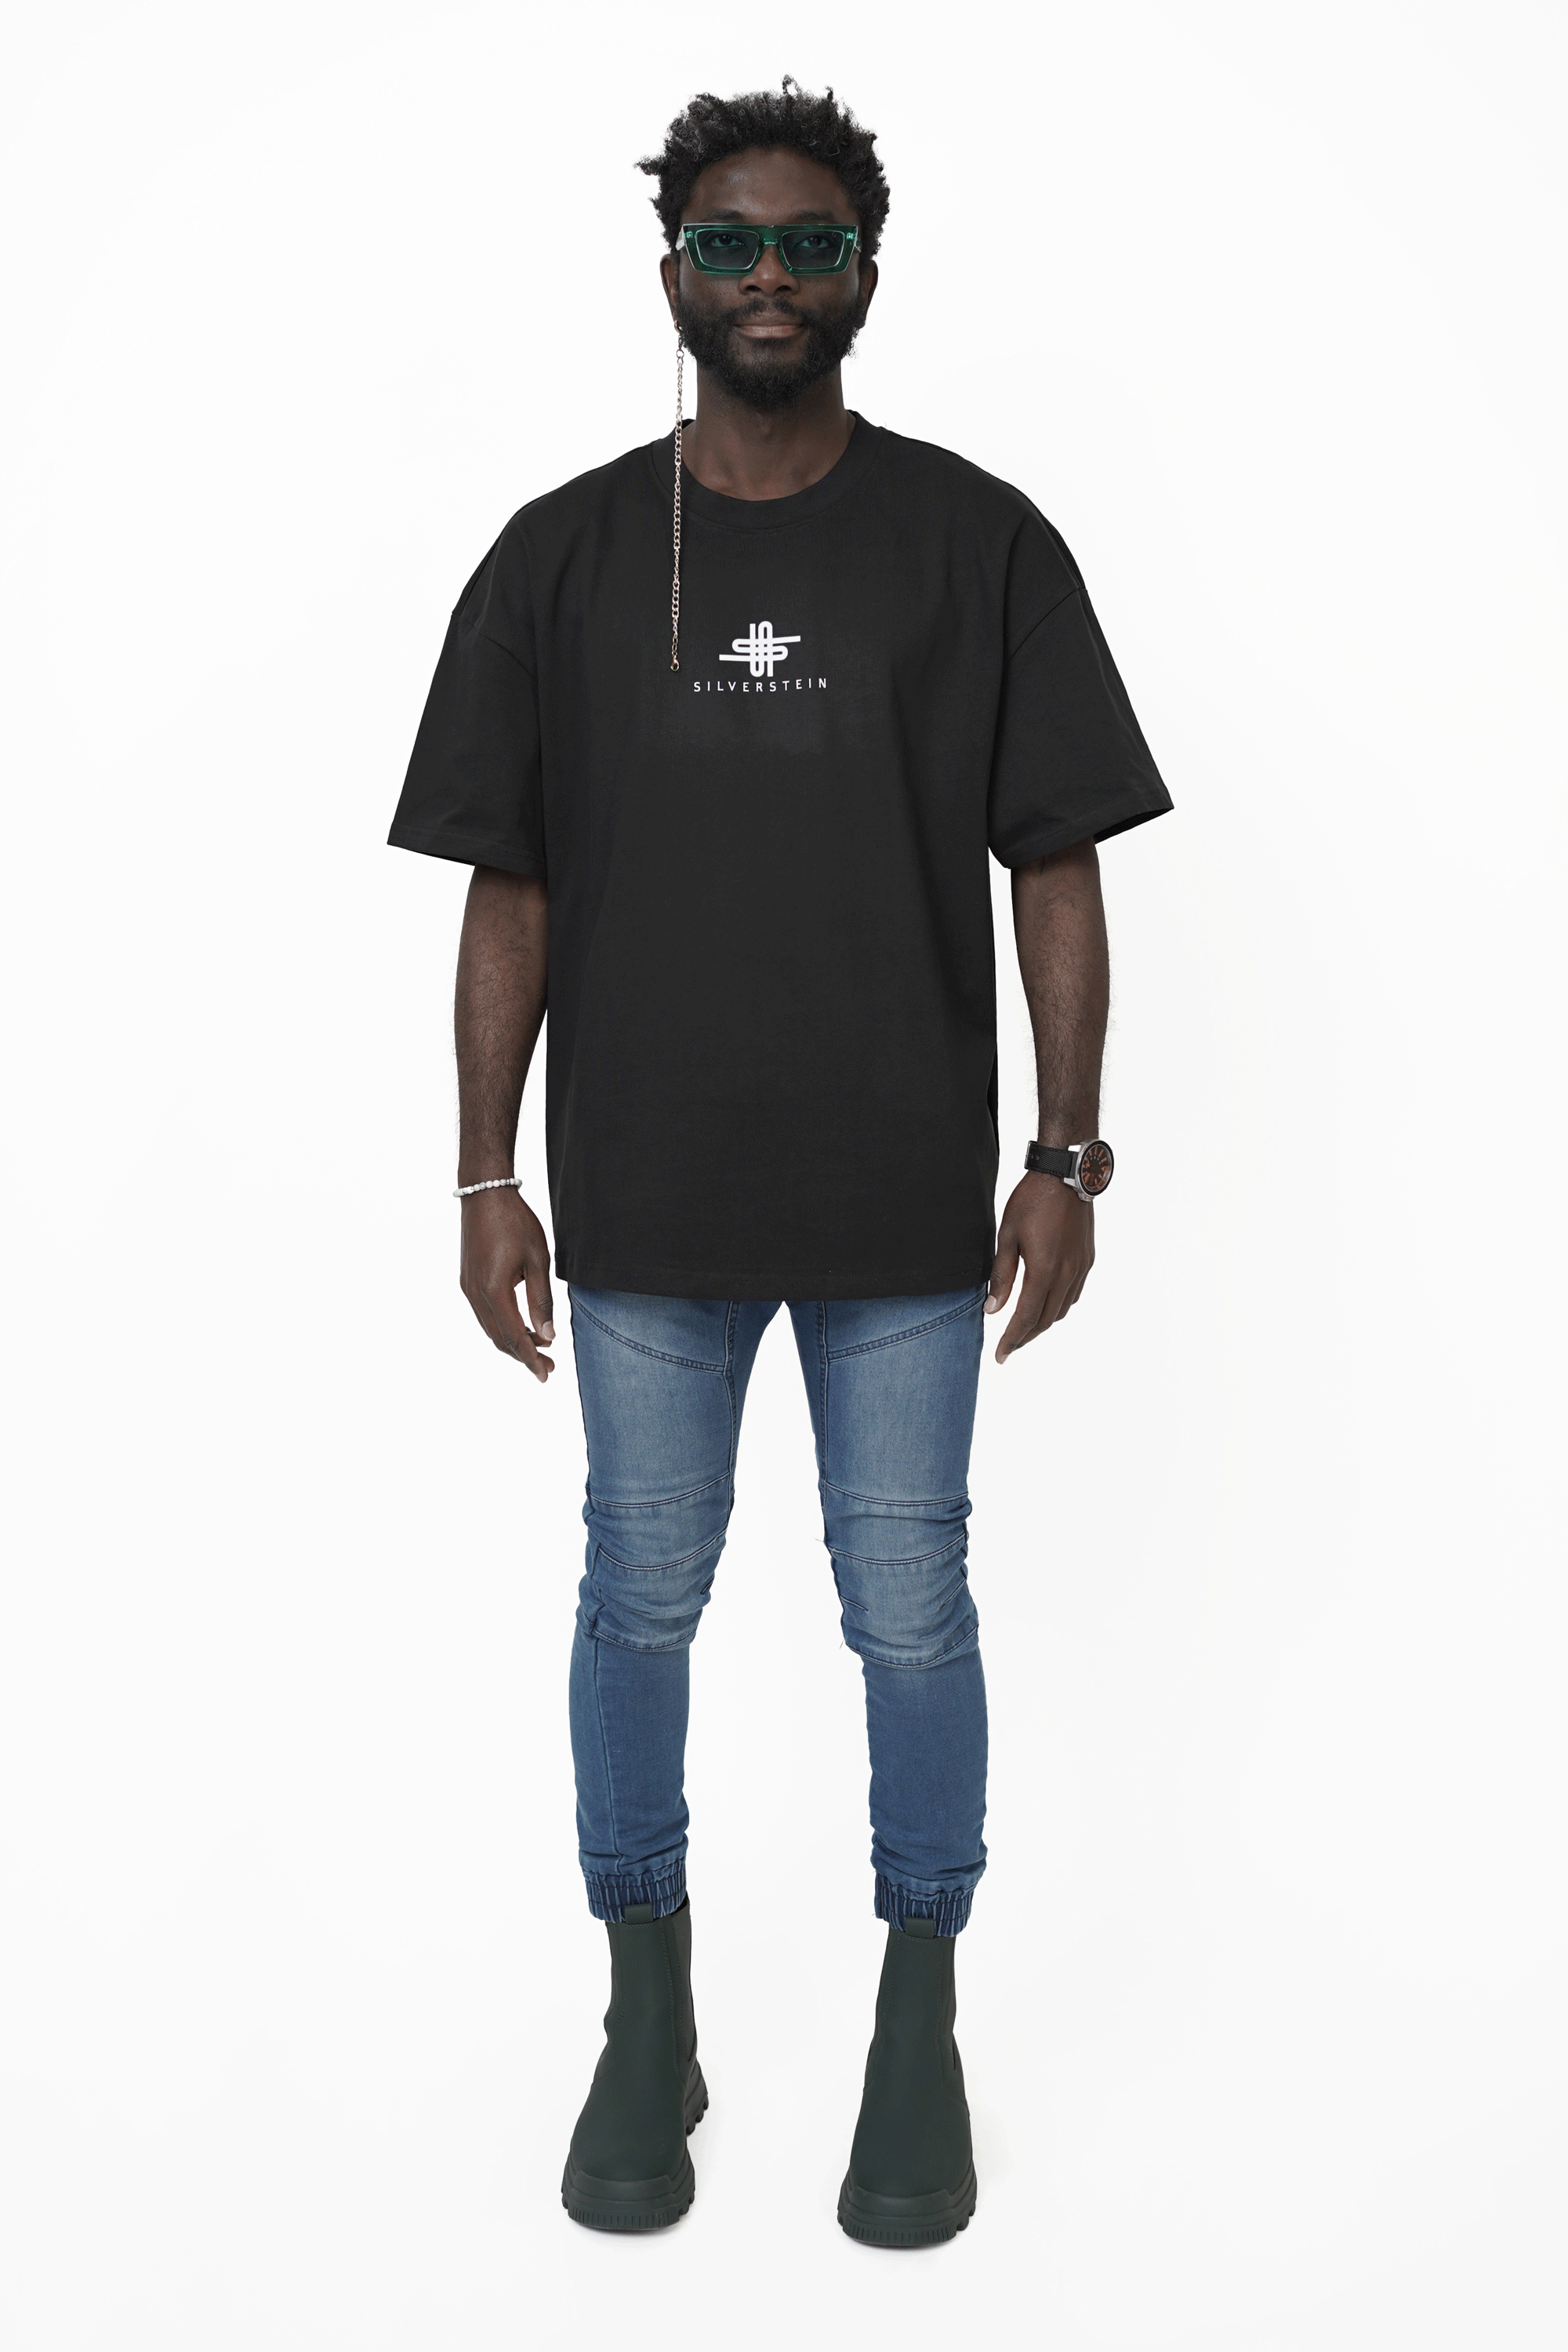 Black "Wing-Butterfly" Unisex T-shirt